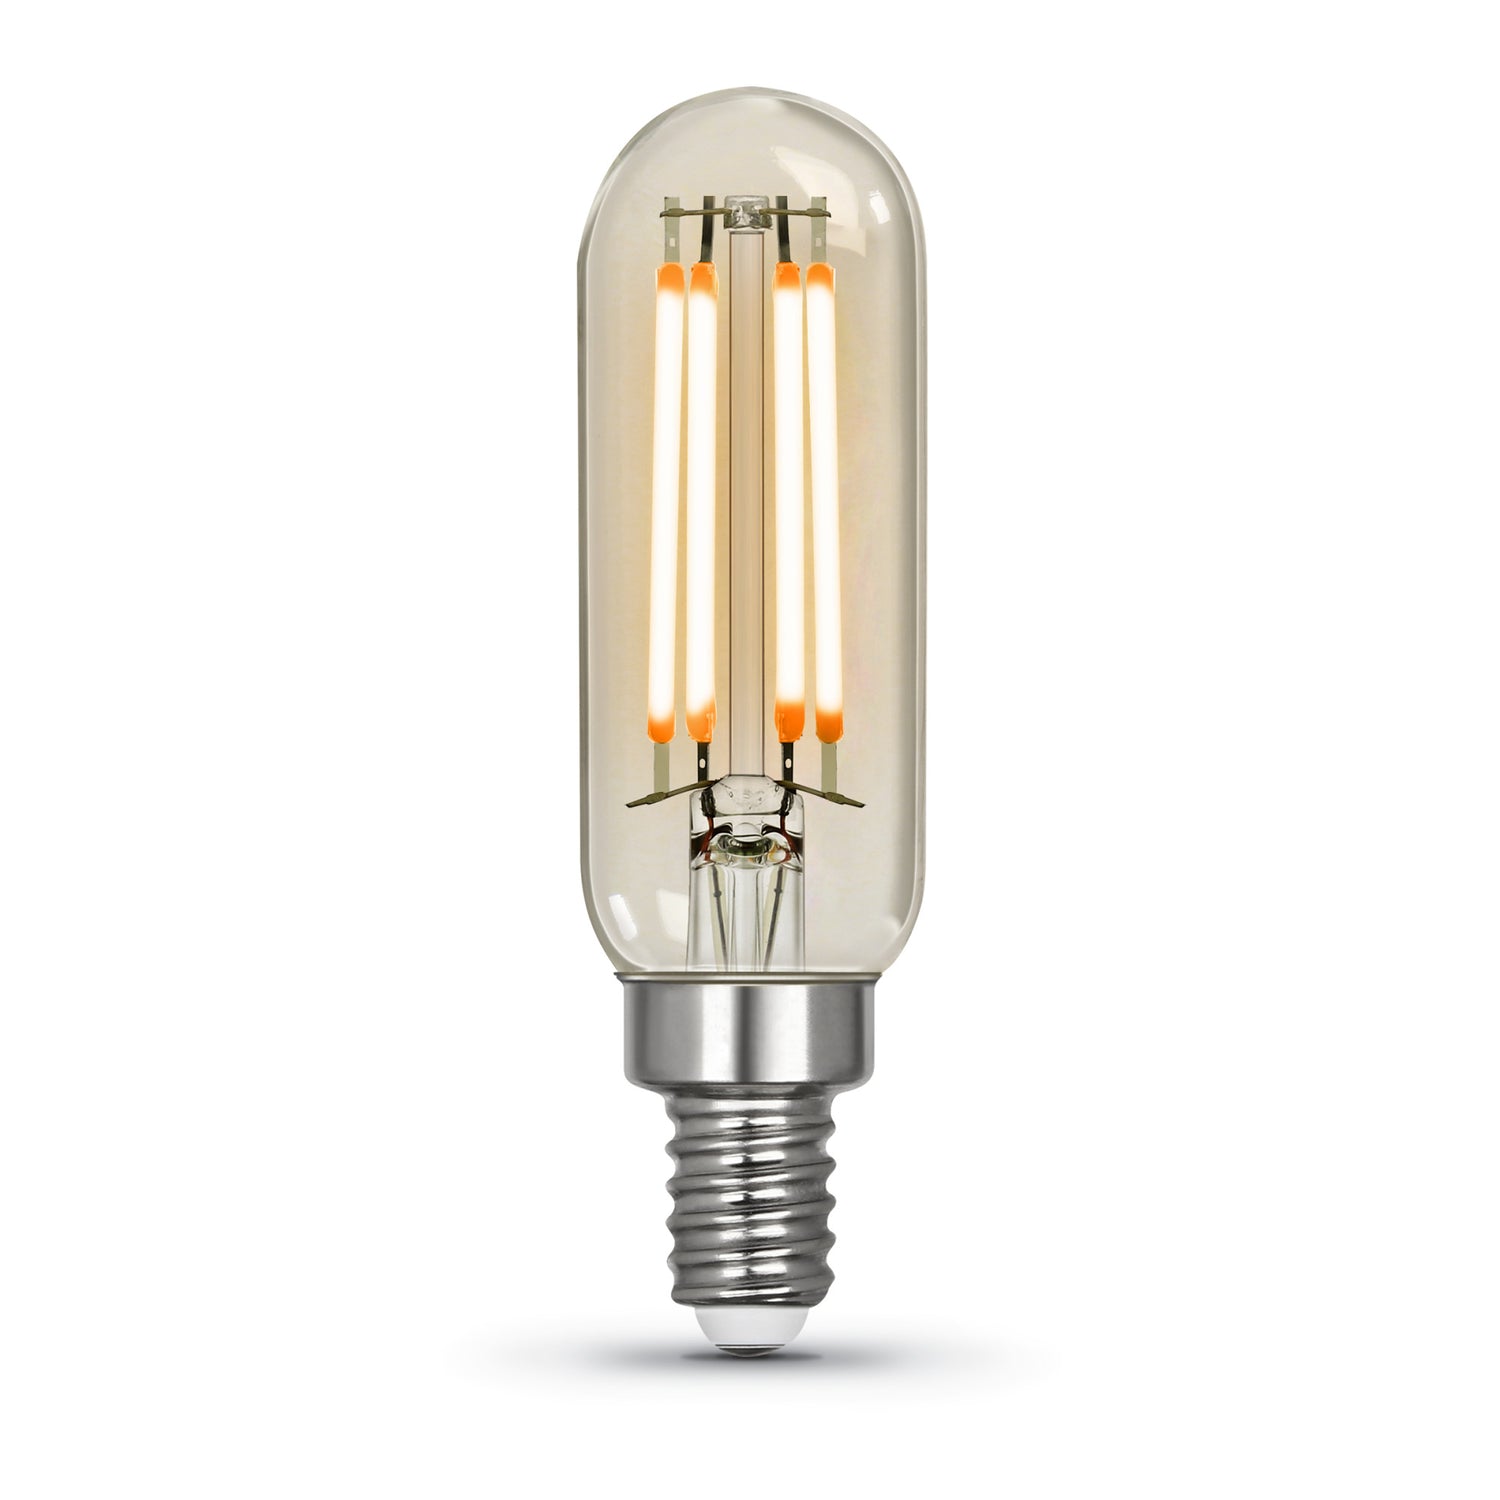 4W (40W Equivalent) Warm Light (2100K) T6 Shape (E12 Base) Clear Glass Filament LED (4-Pack)